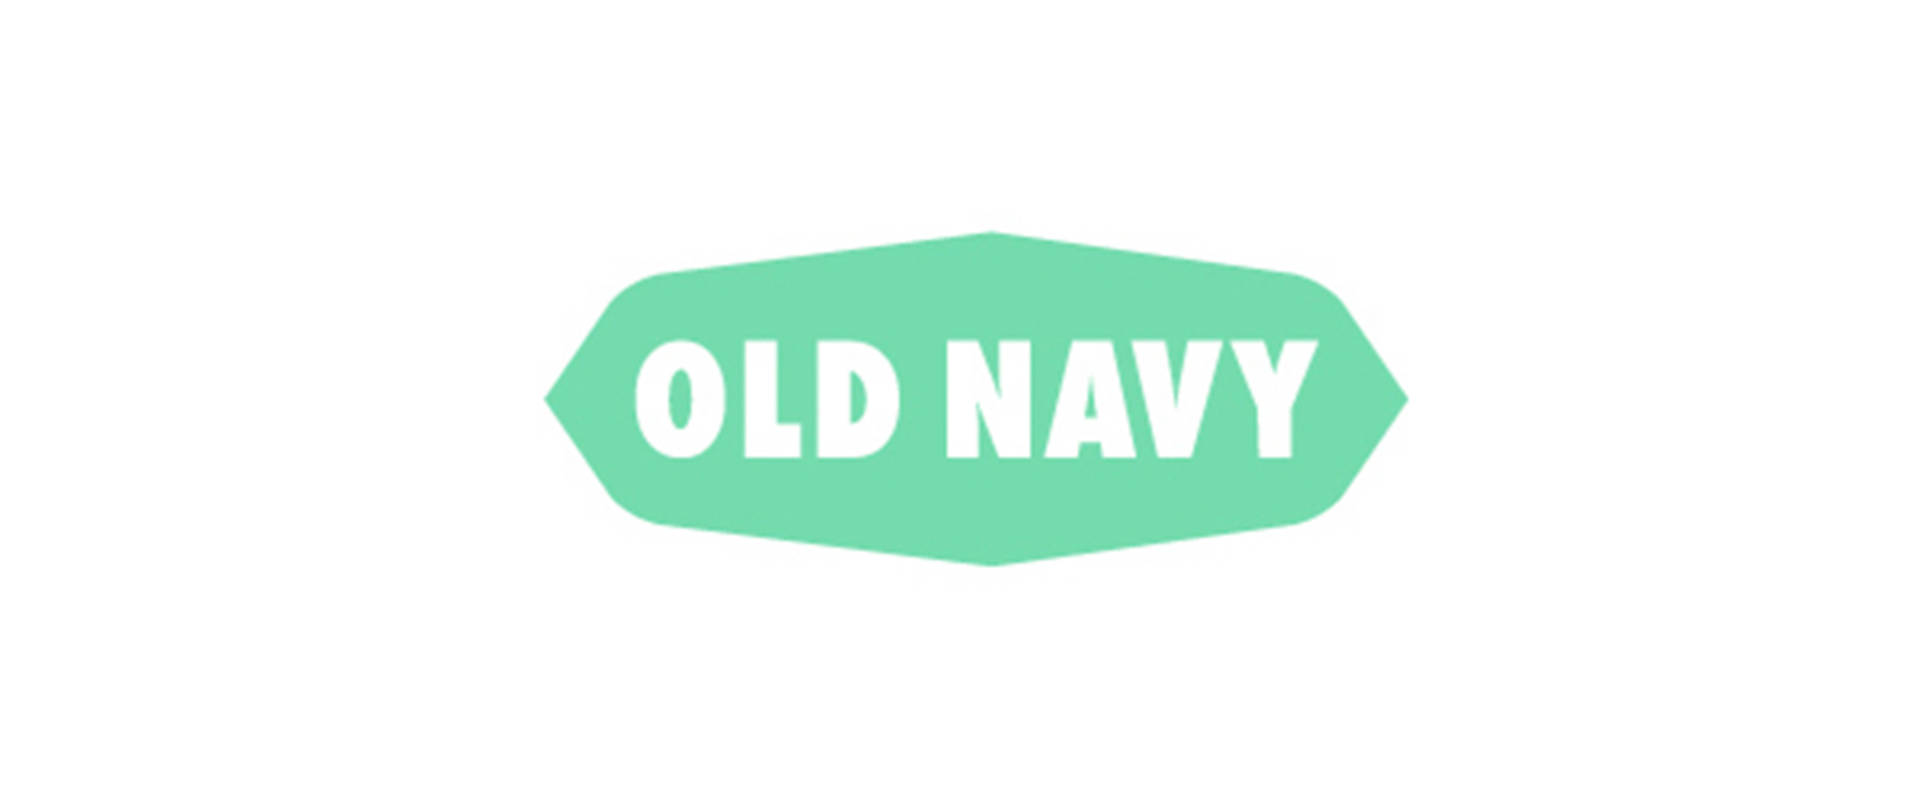 Old Navy Green Logo Design Wallpaper